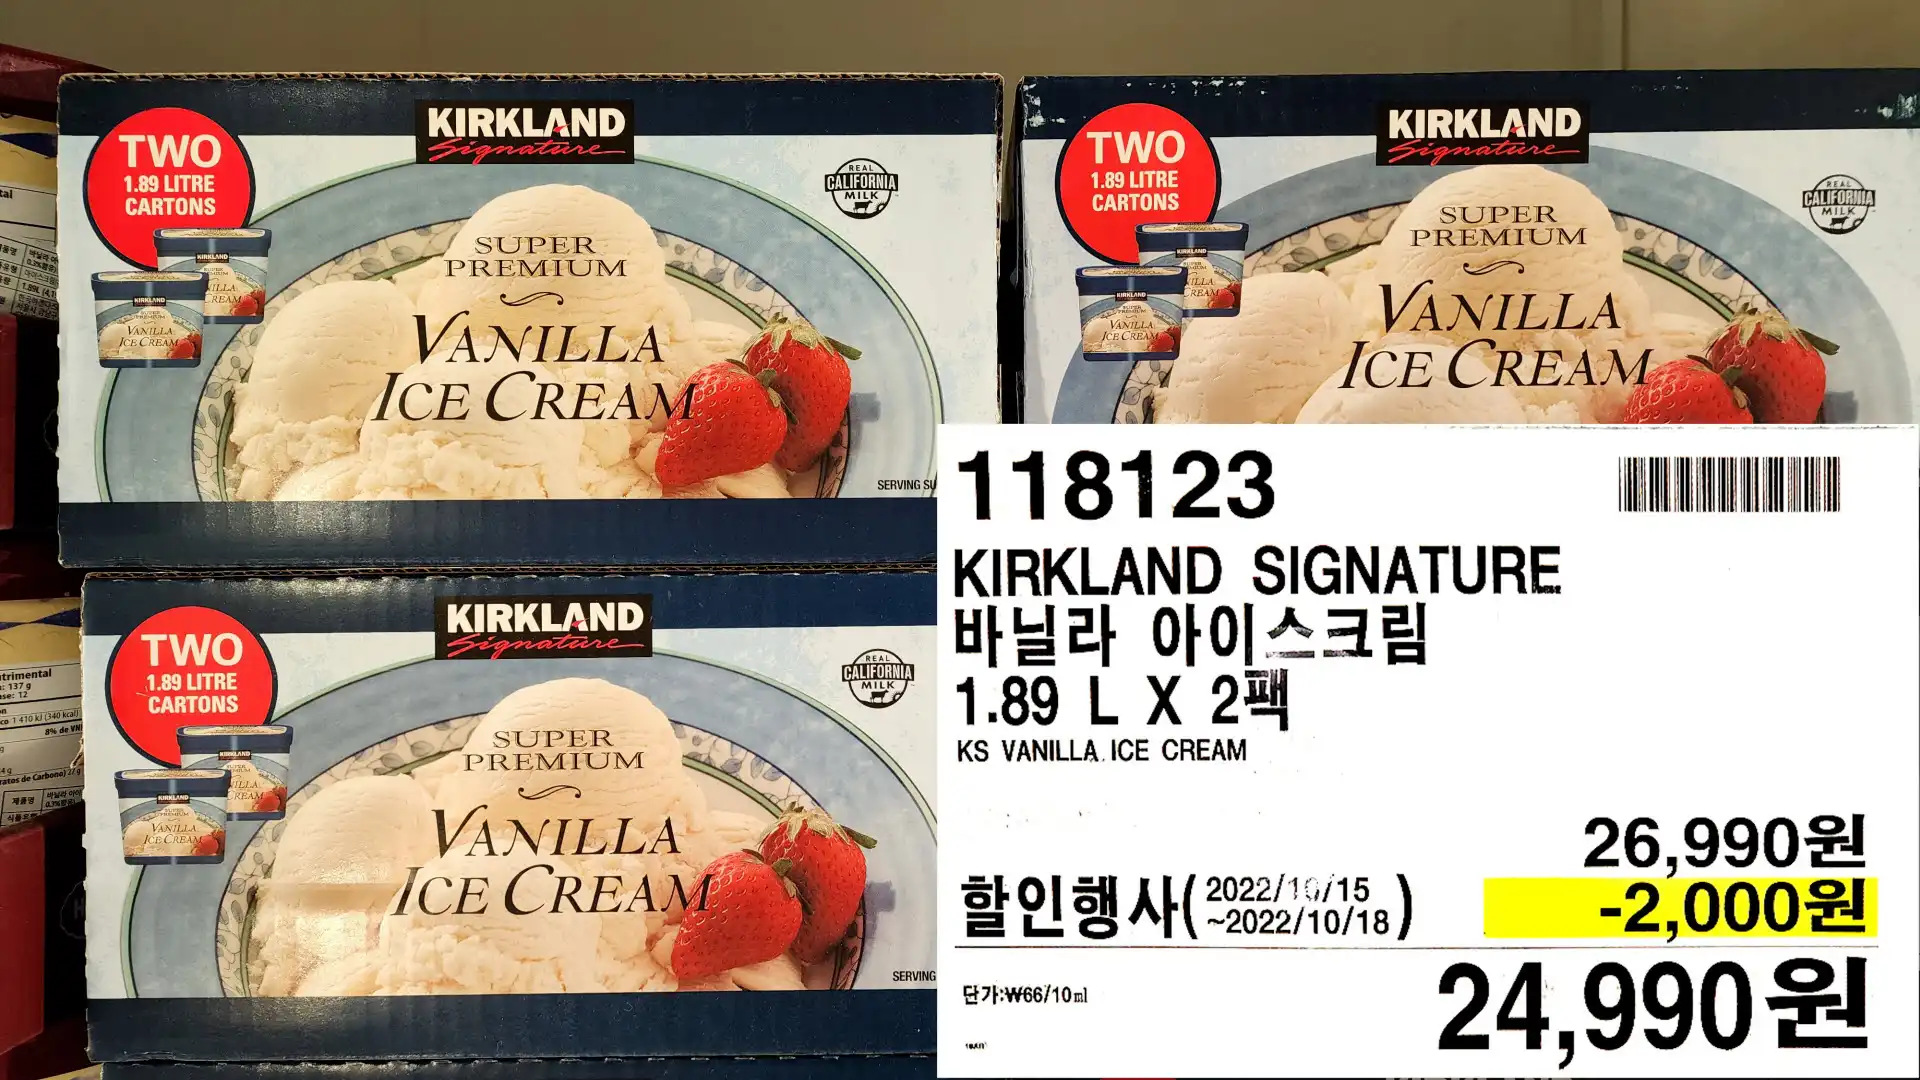 KIRKLAND SIGNATURE
바닐라 아이스크림
1.89 LX2팩
KS VANILLA ICE CREAM
24,990원